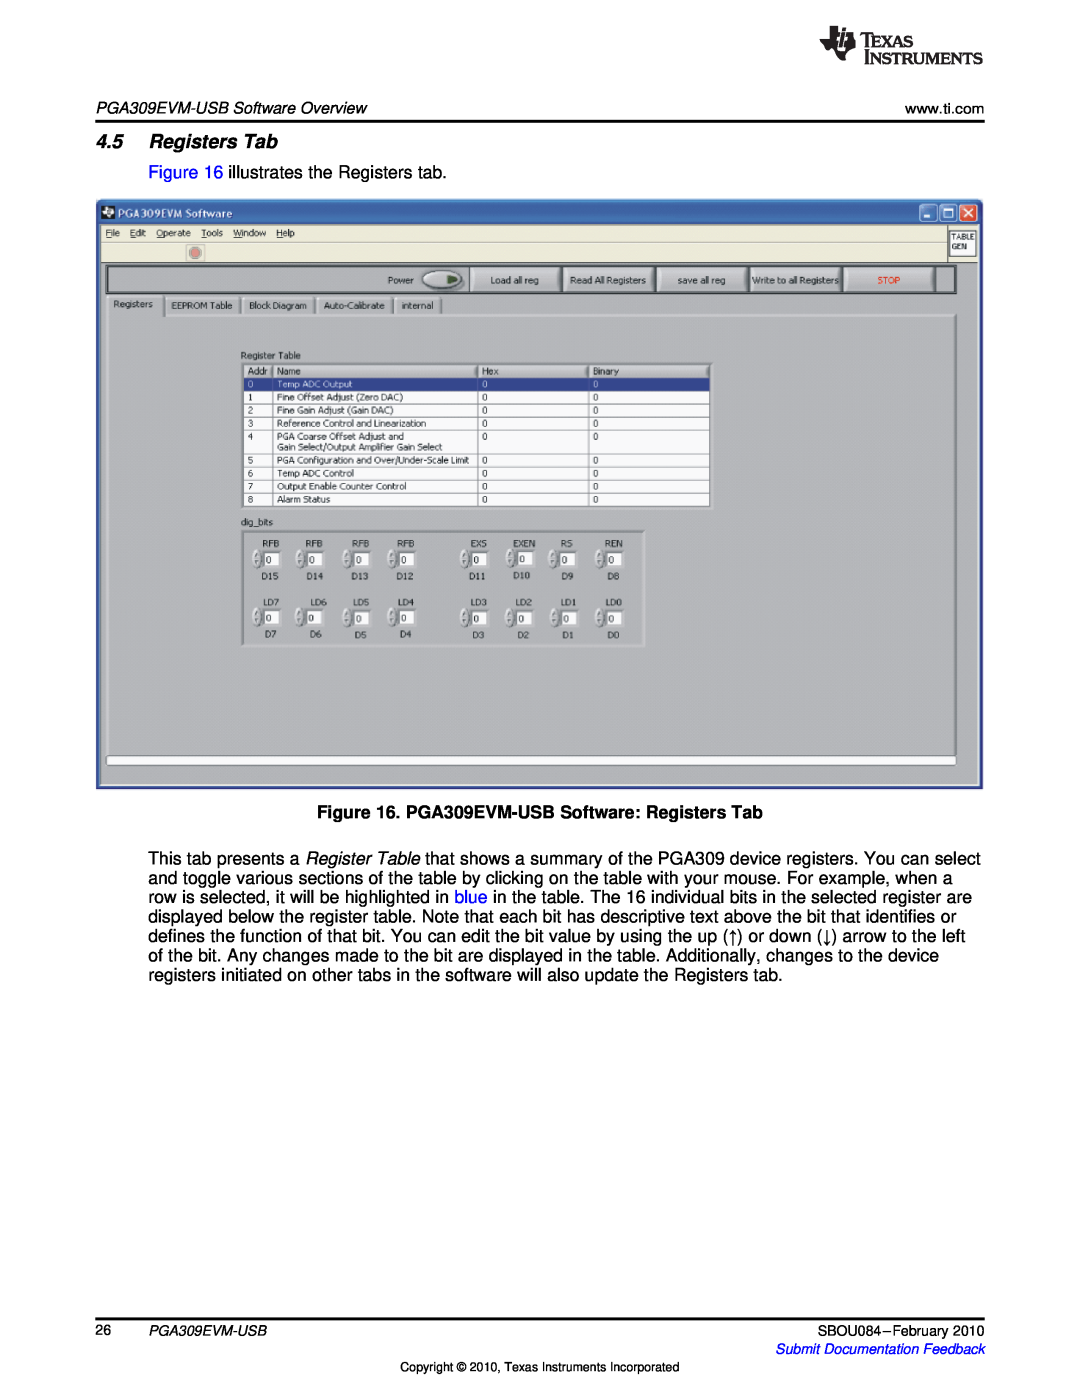 Texas Instruments manual PGA309EVM-USB Software Registers Tab 